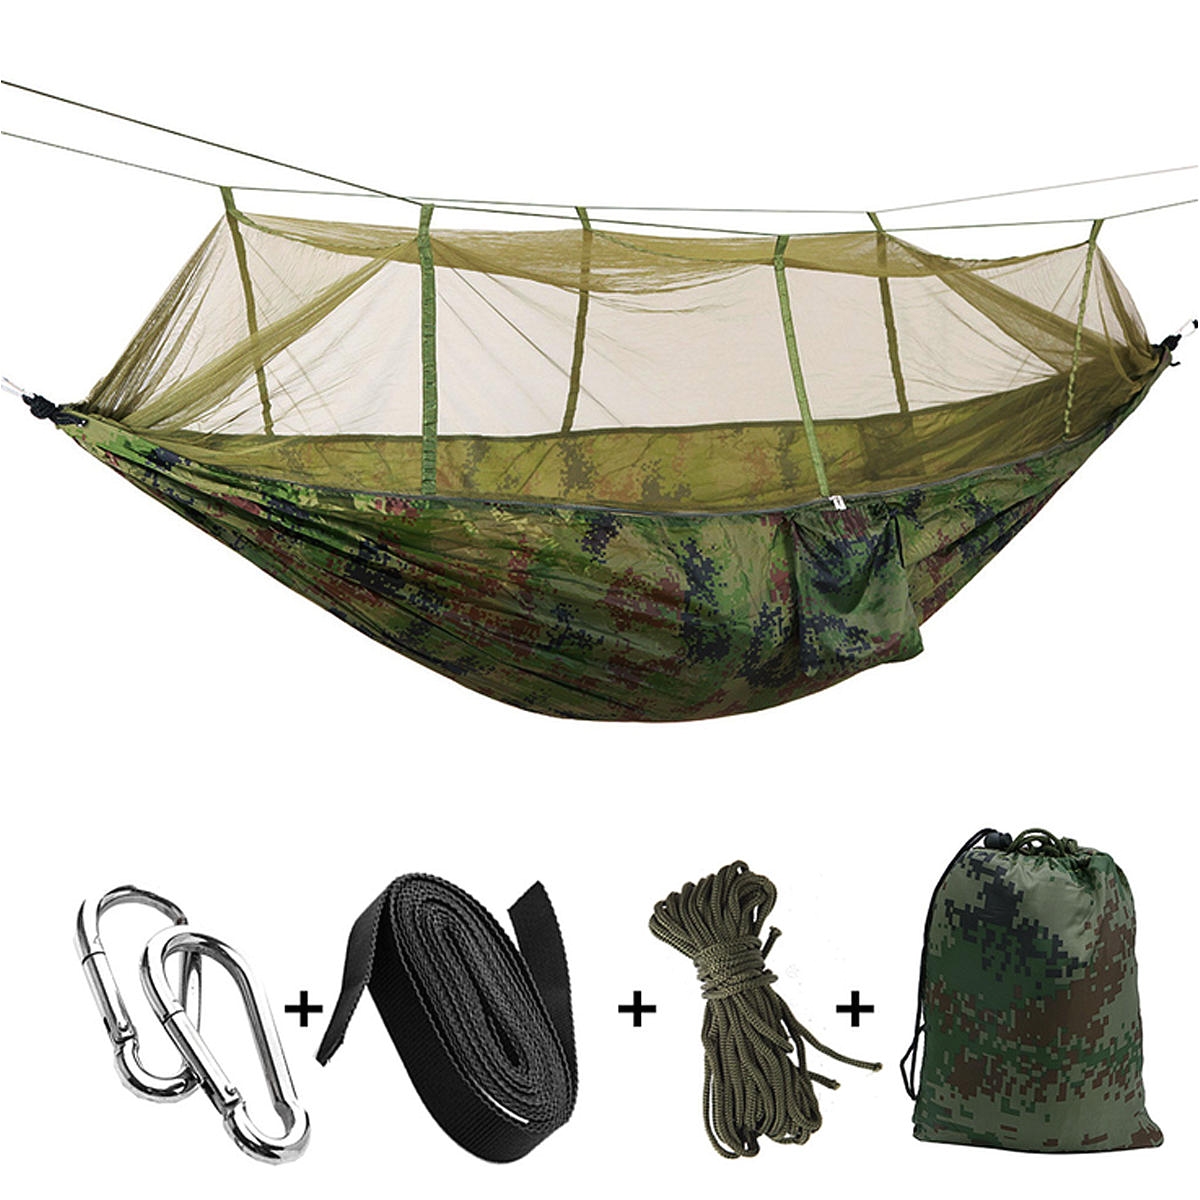 1 2 person camo outdoor mosquito net hammock camping hanging sleeping bed swing portable hammock